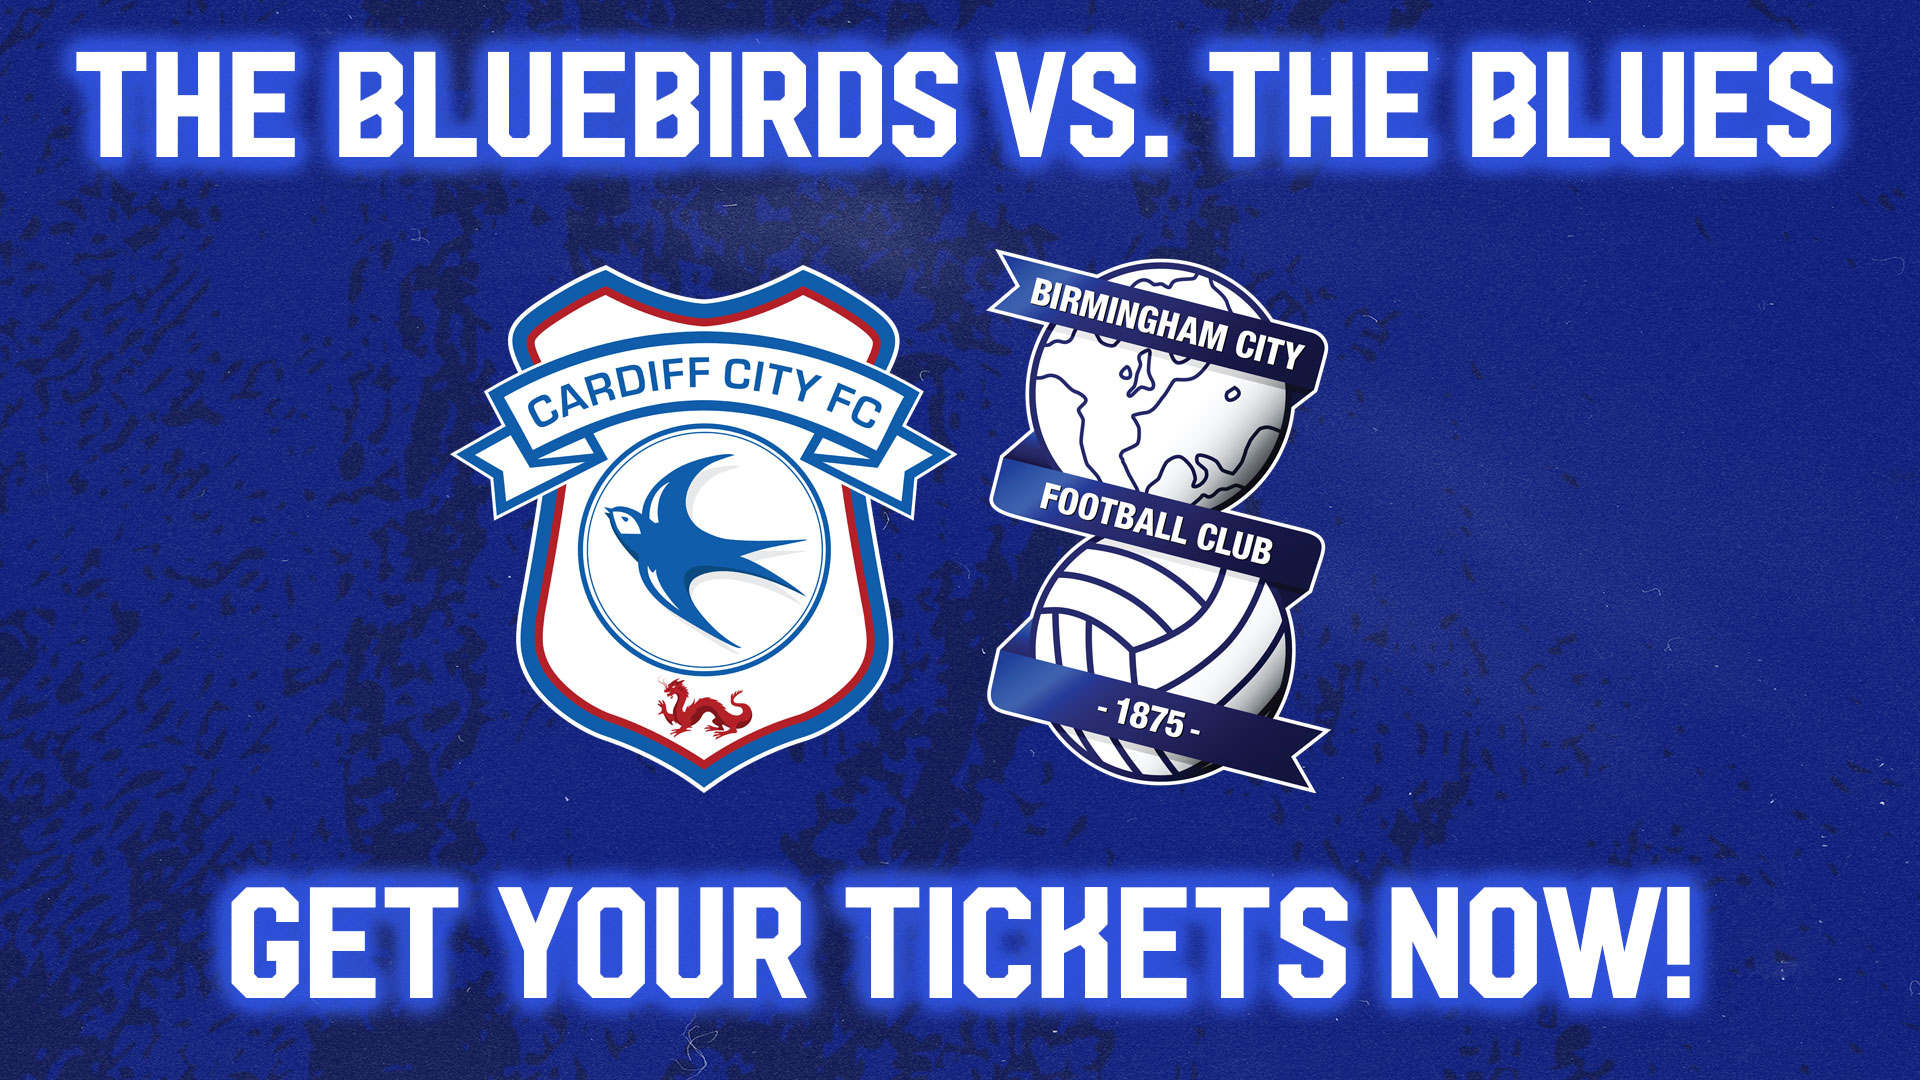 The Bluebirds vs. the Blues...